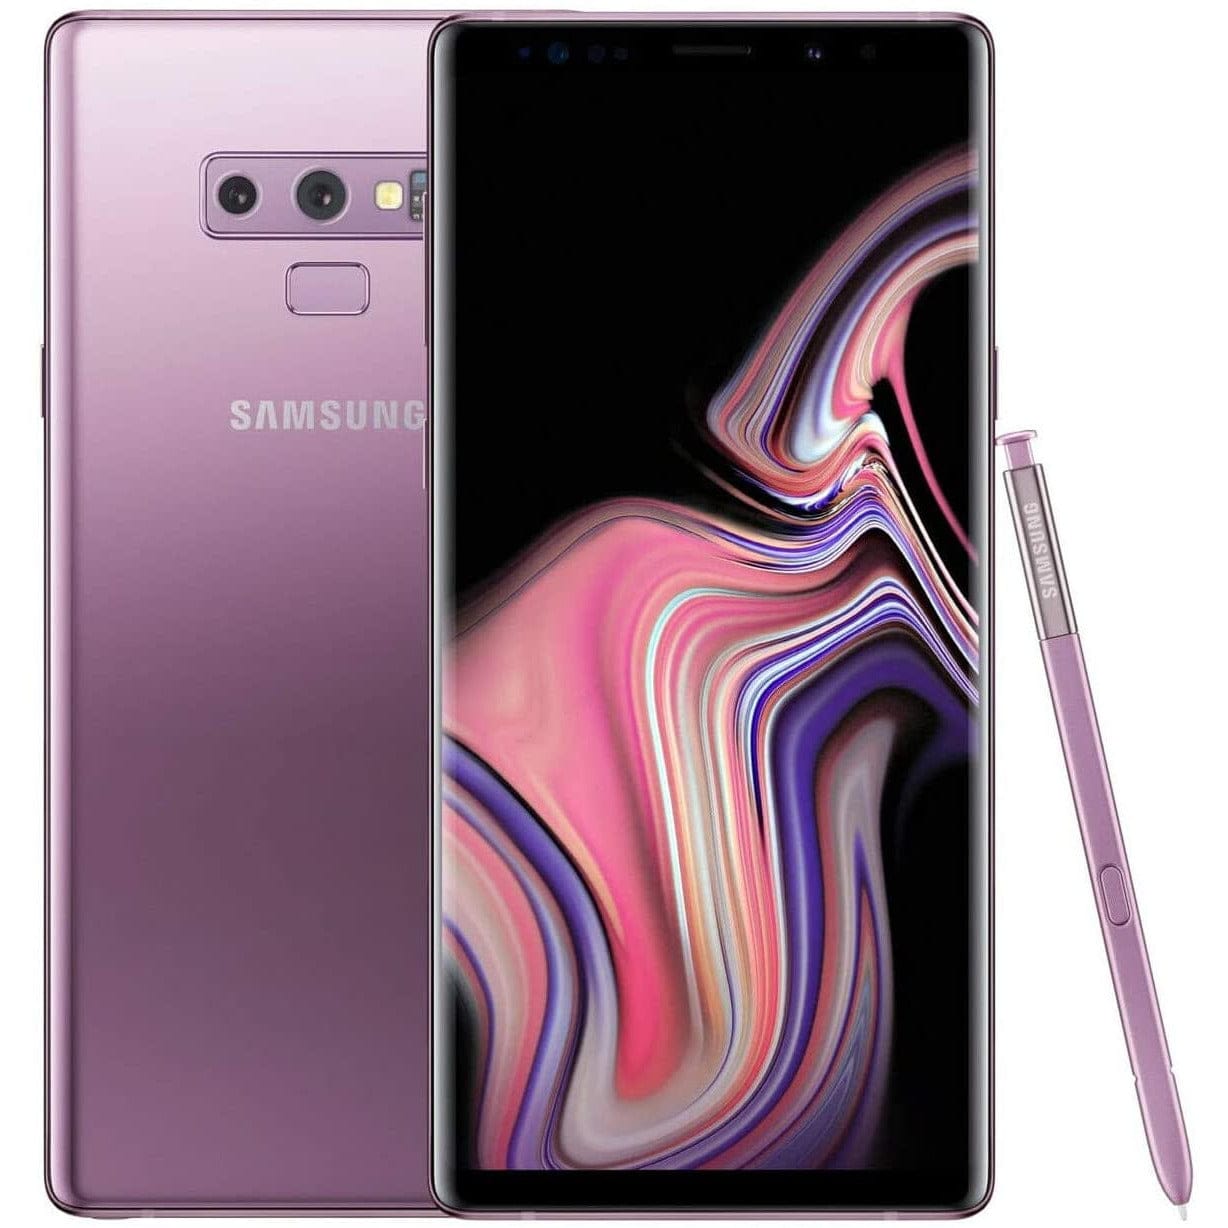 Samsung Galaxy Note9 - 128 GB - Lavender Purple - AT&T - GSM